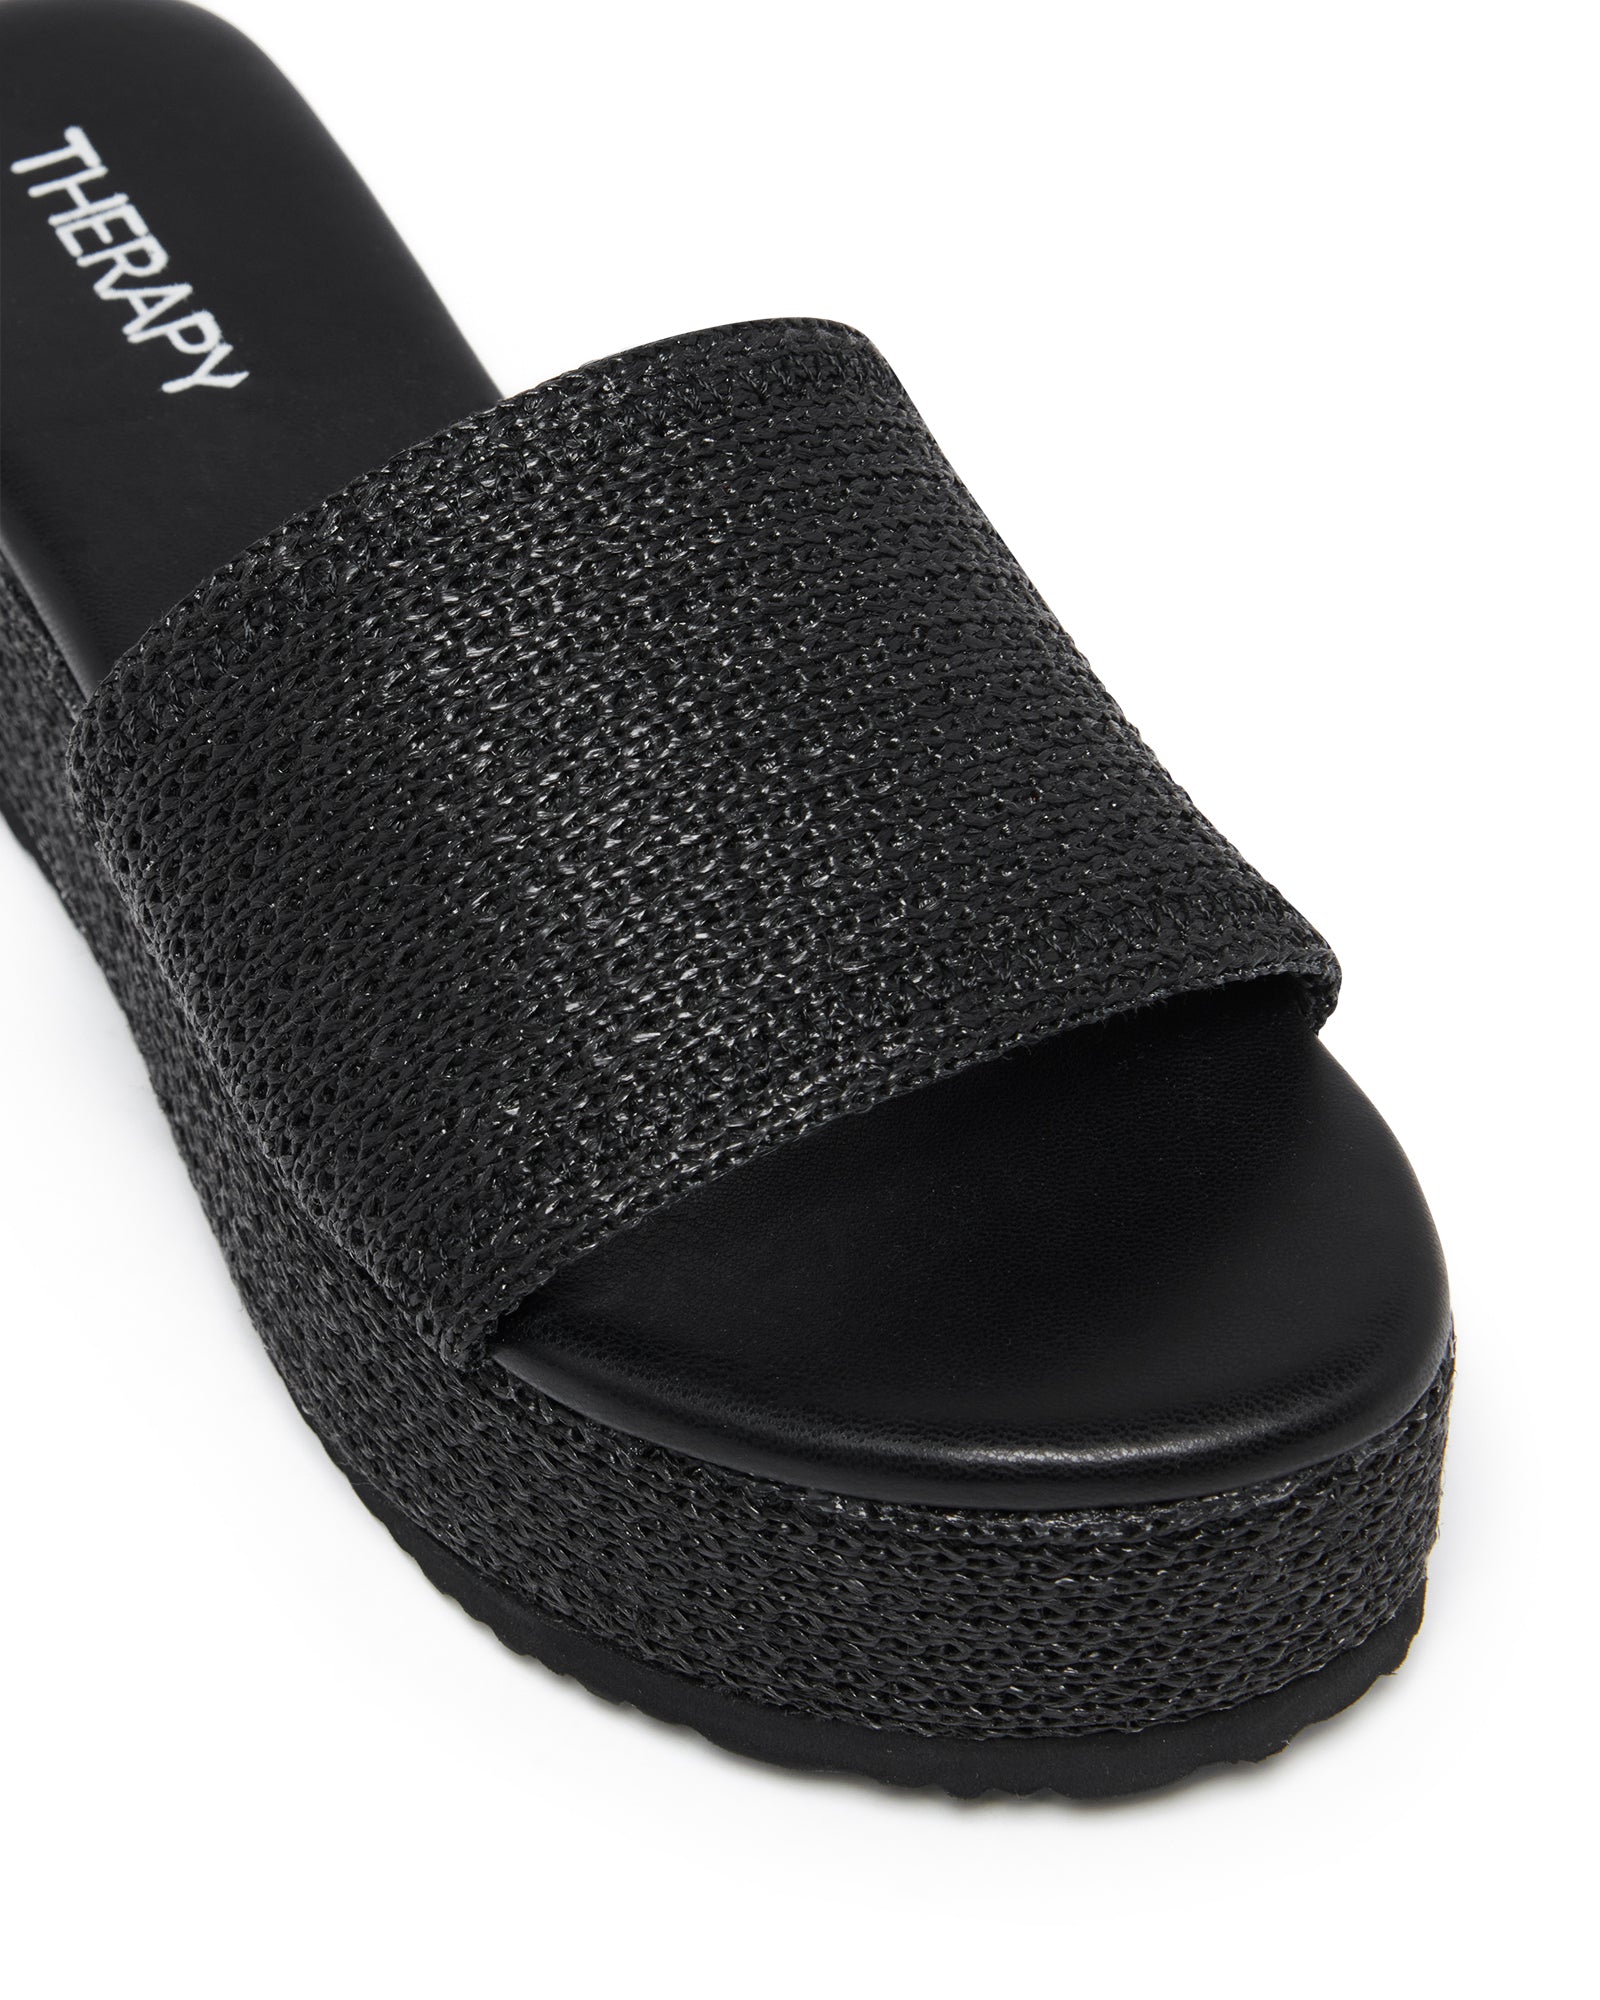 Therapy Shoes Avery Black Raffia | Women's Sandals | Slides | Flatform